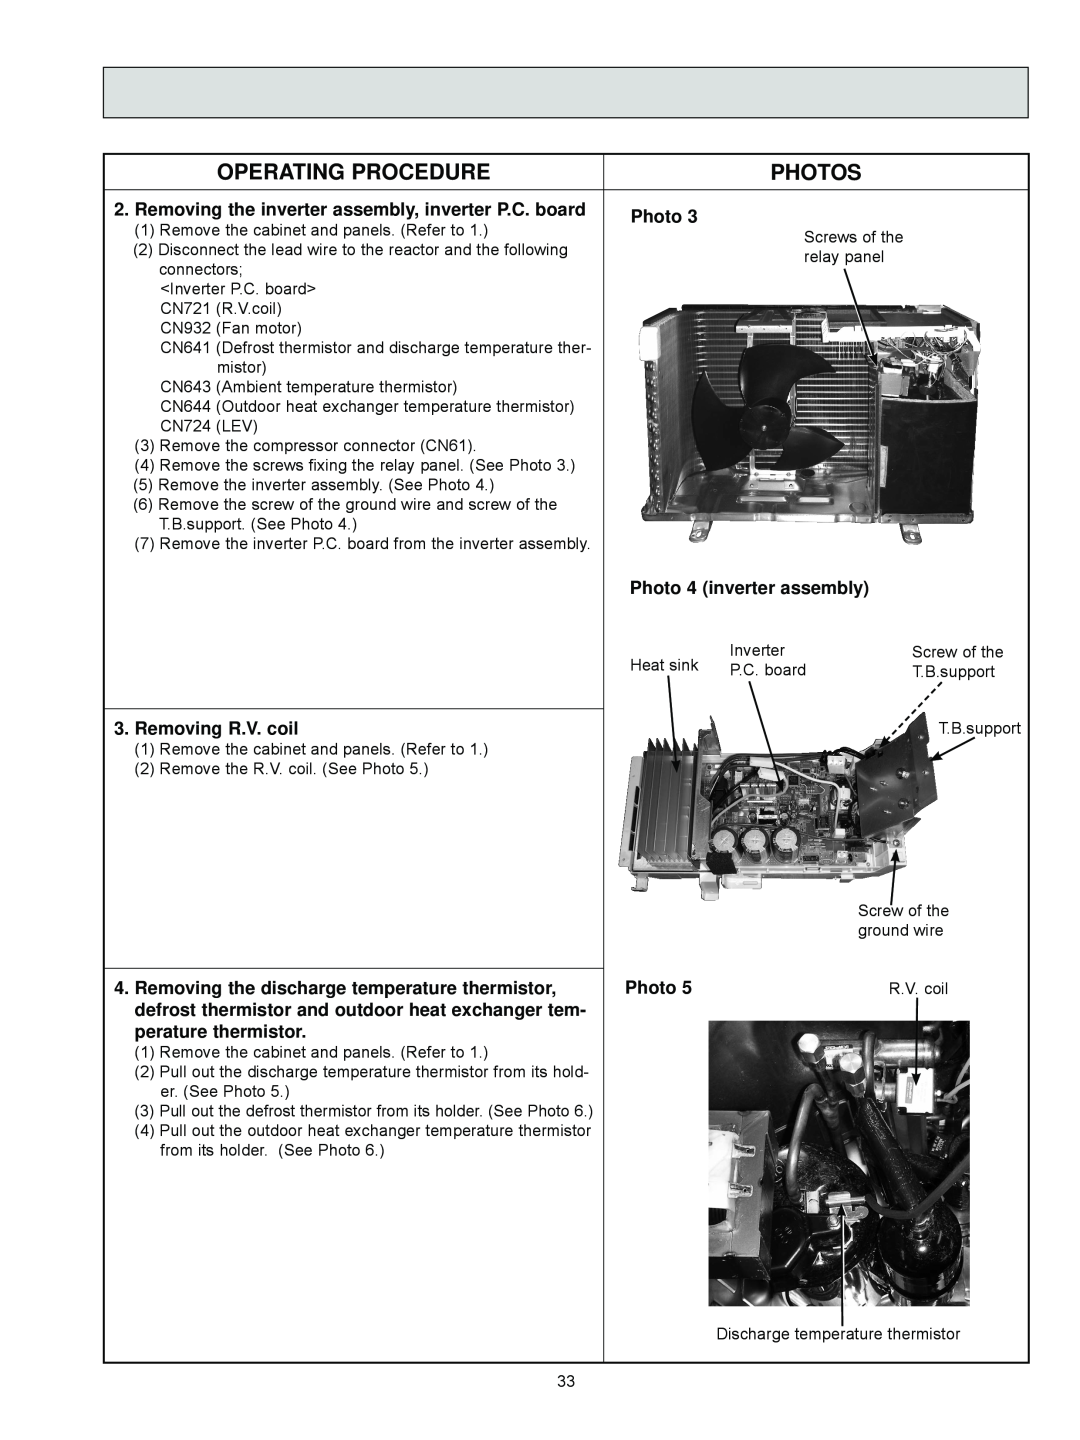 Black & Decker MUZ-FD12NA- U1 Operating Procedure, Photos, Photo 4 inverter assembly, Removing R.V. coil, Screw of the 